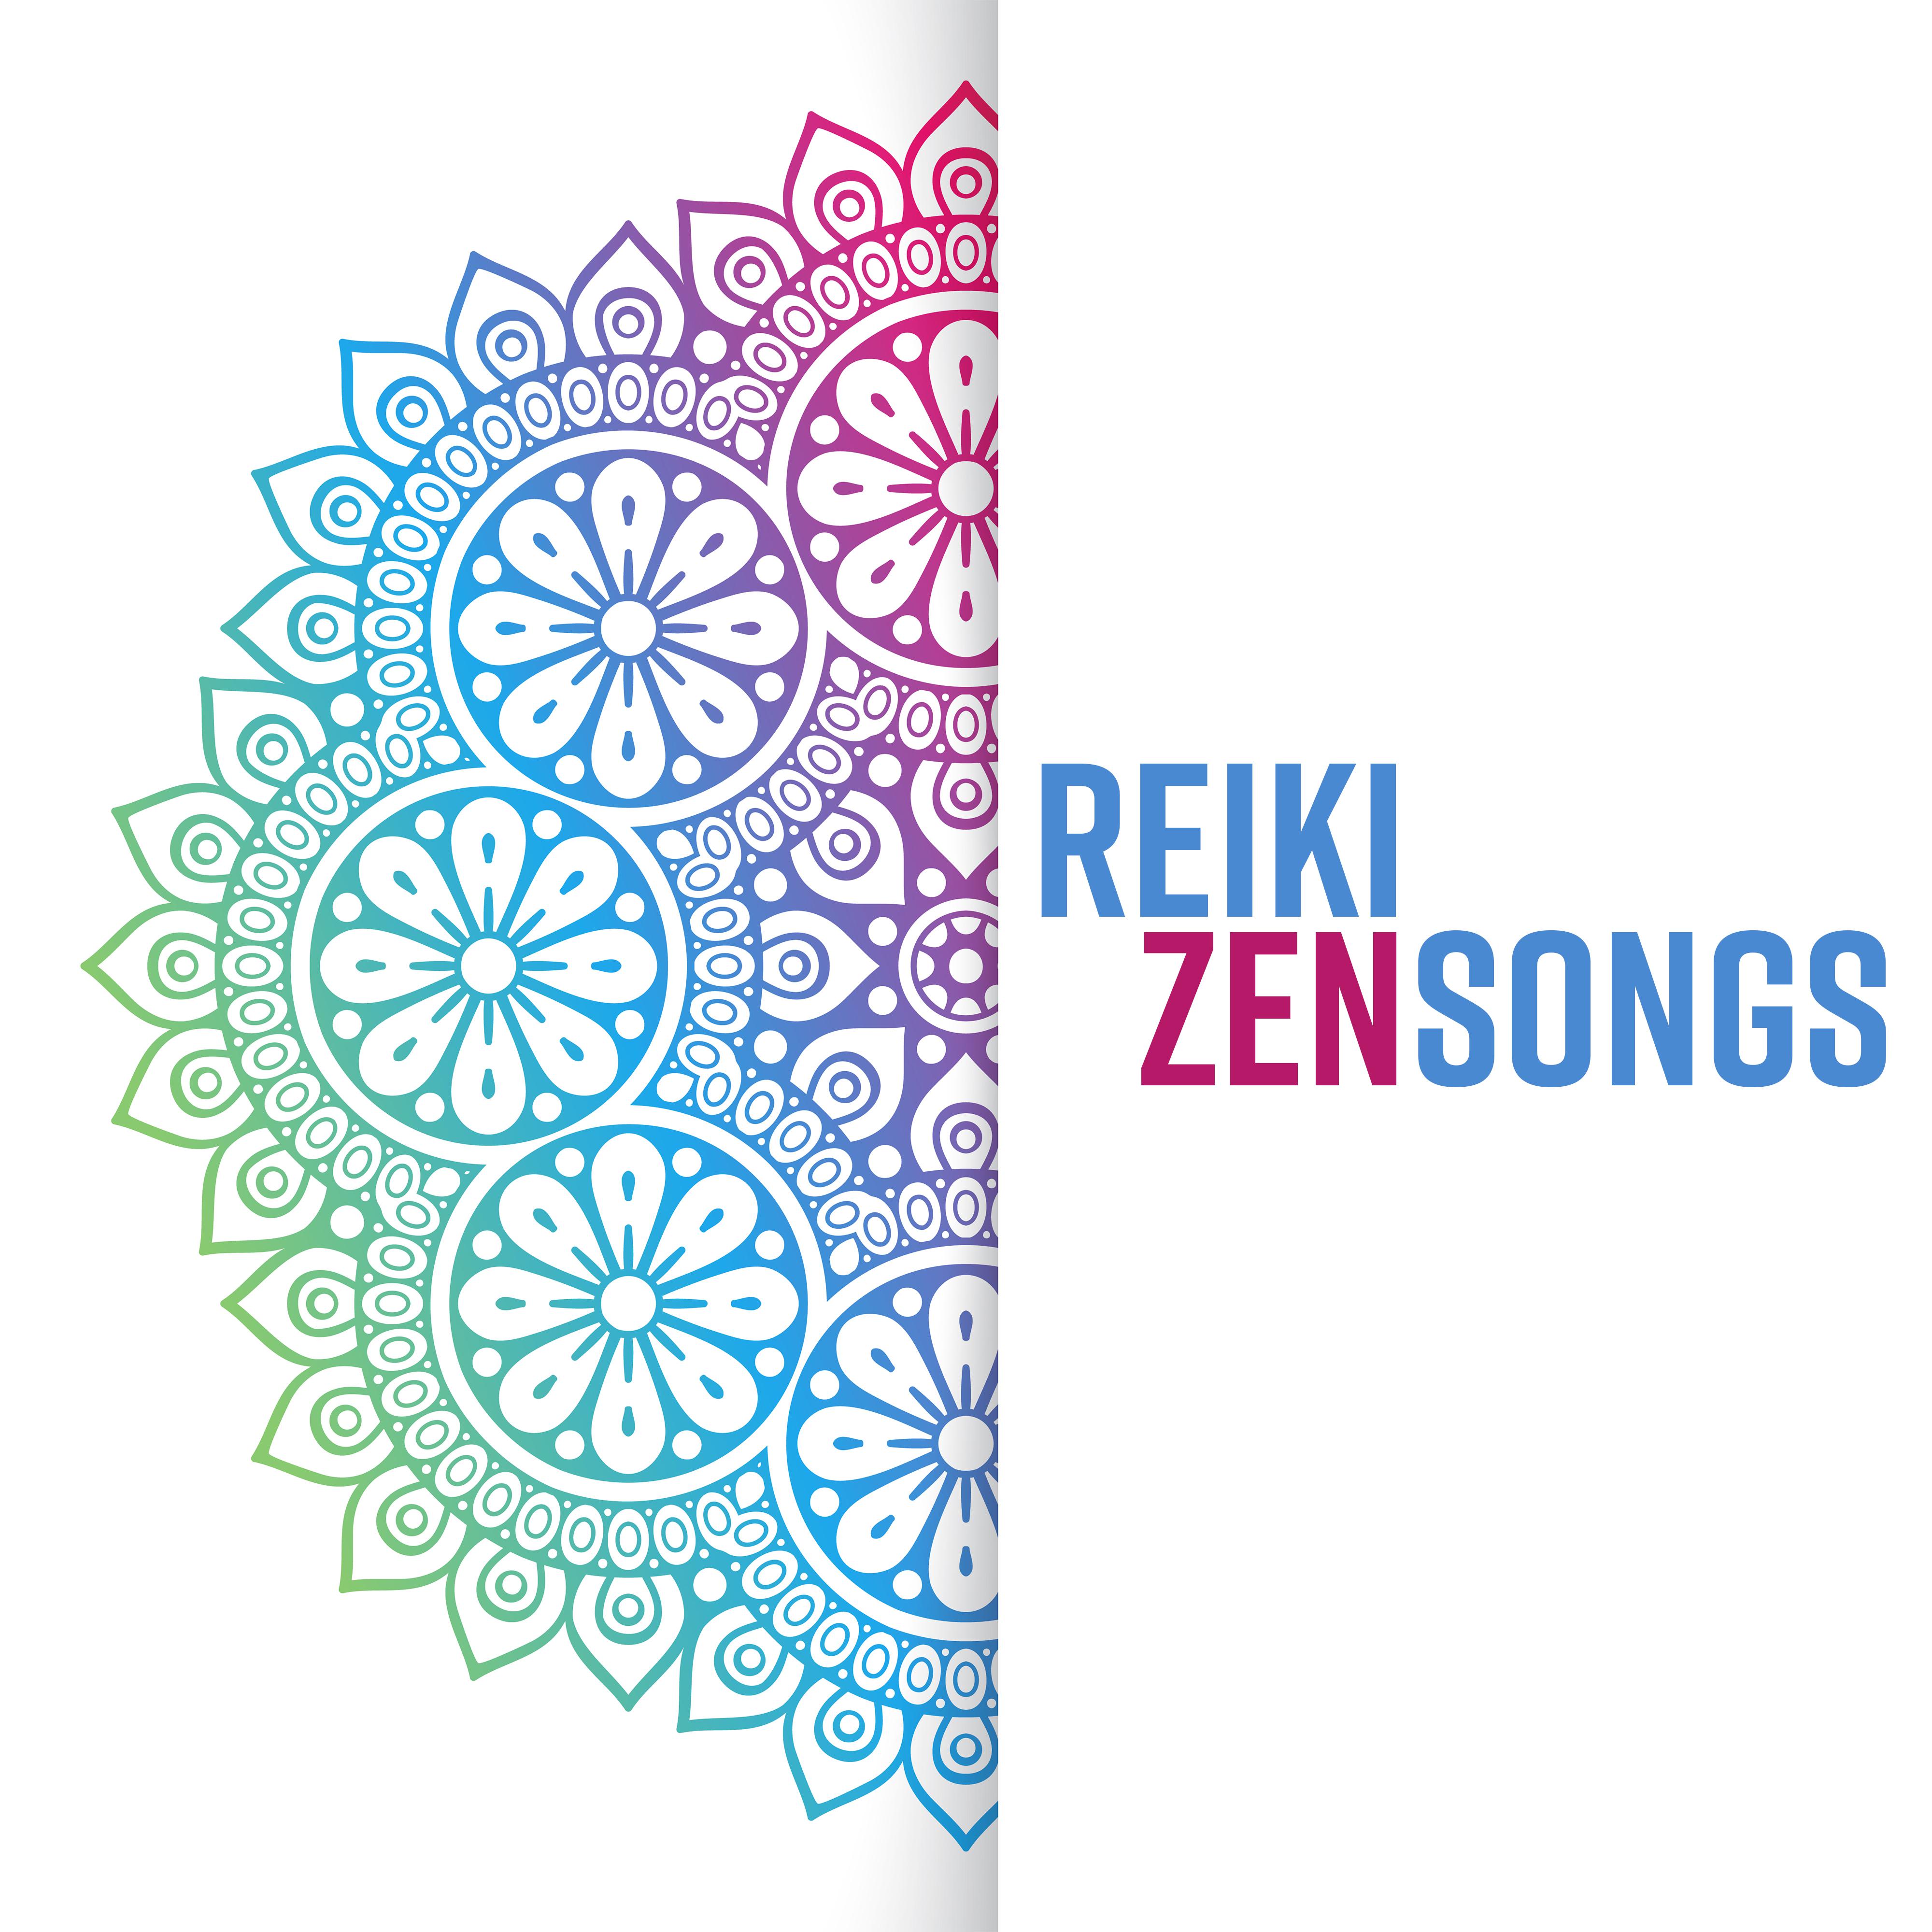 Reiki Zen Songs